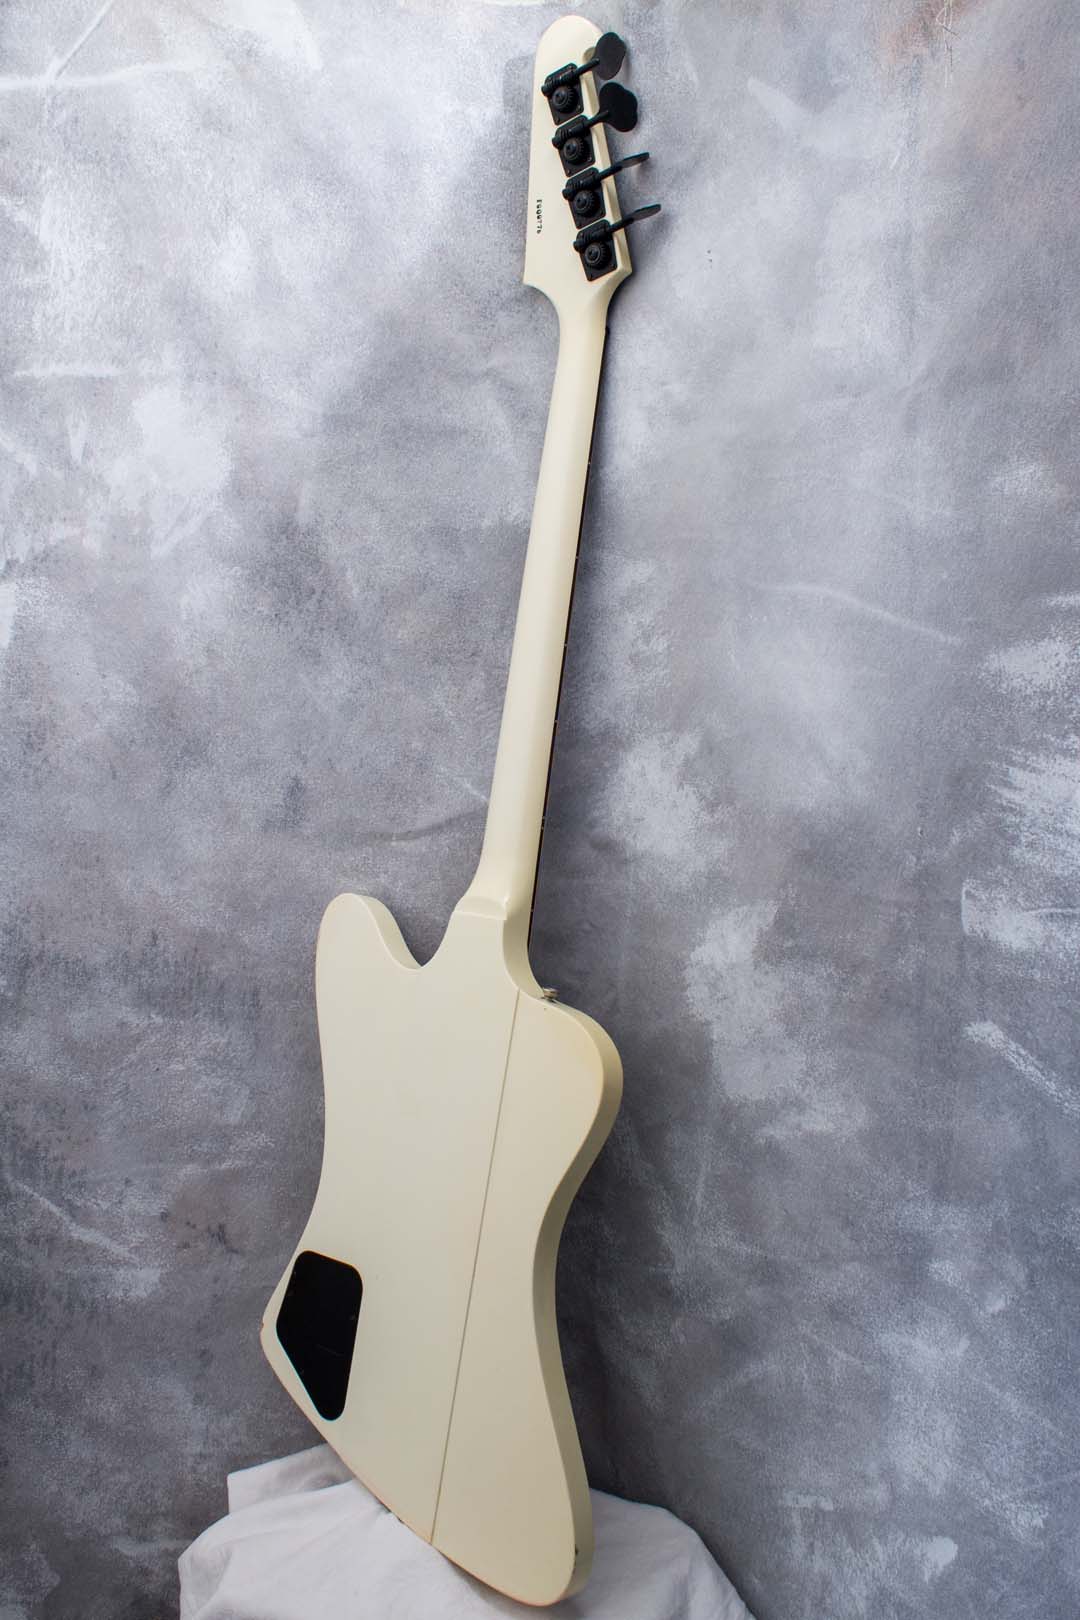 Greco TBR75 T-Bird-Style Bass Arctic White 1990